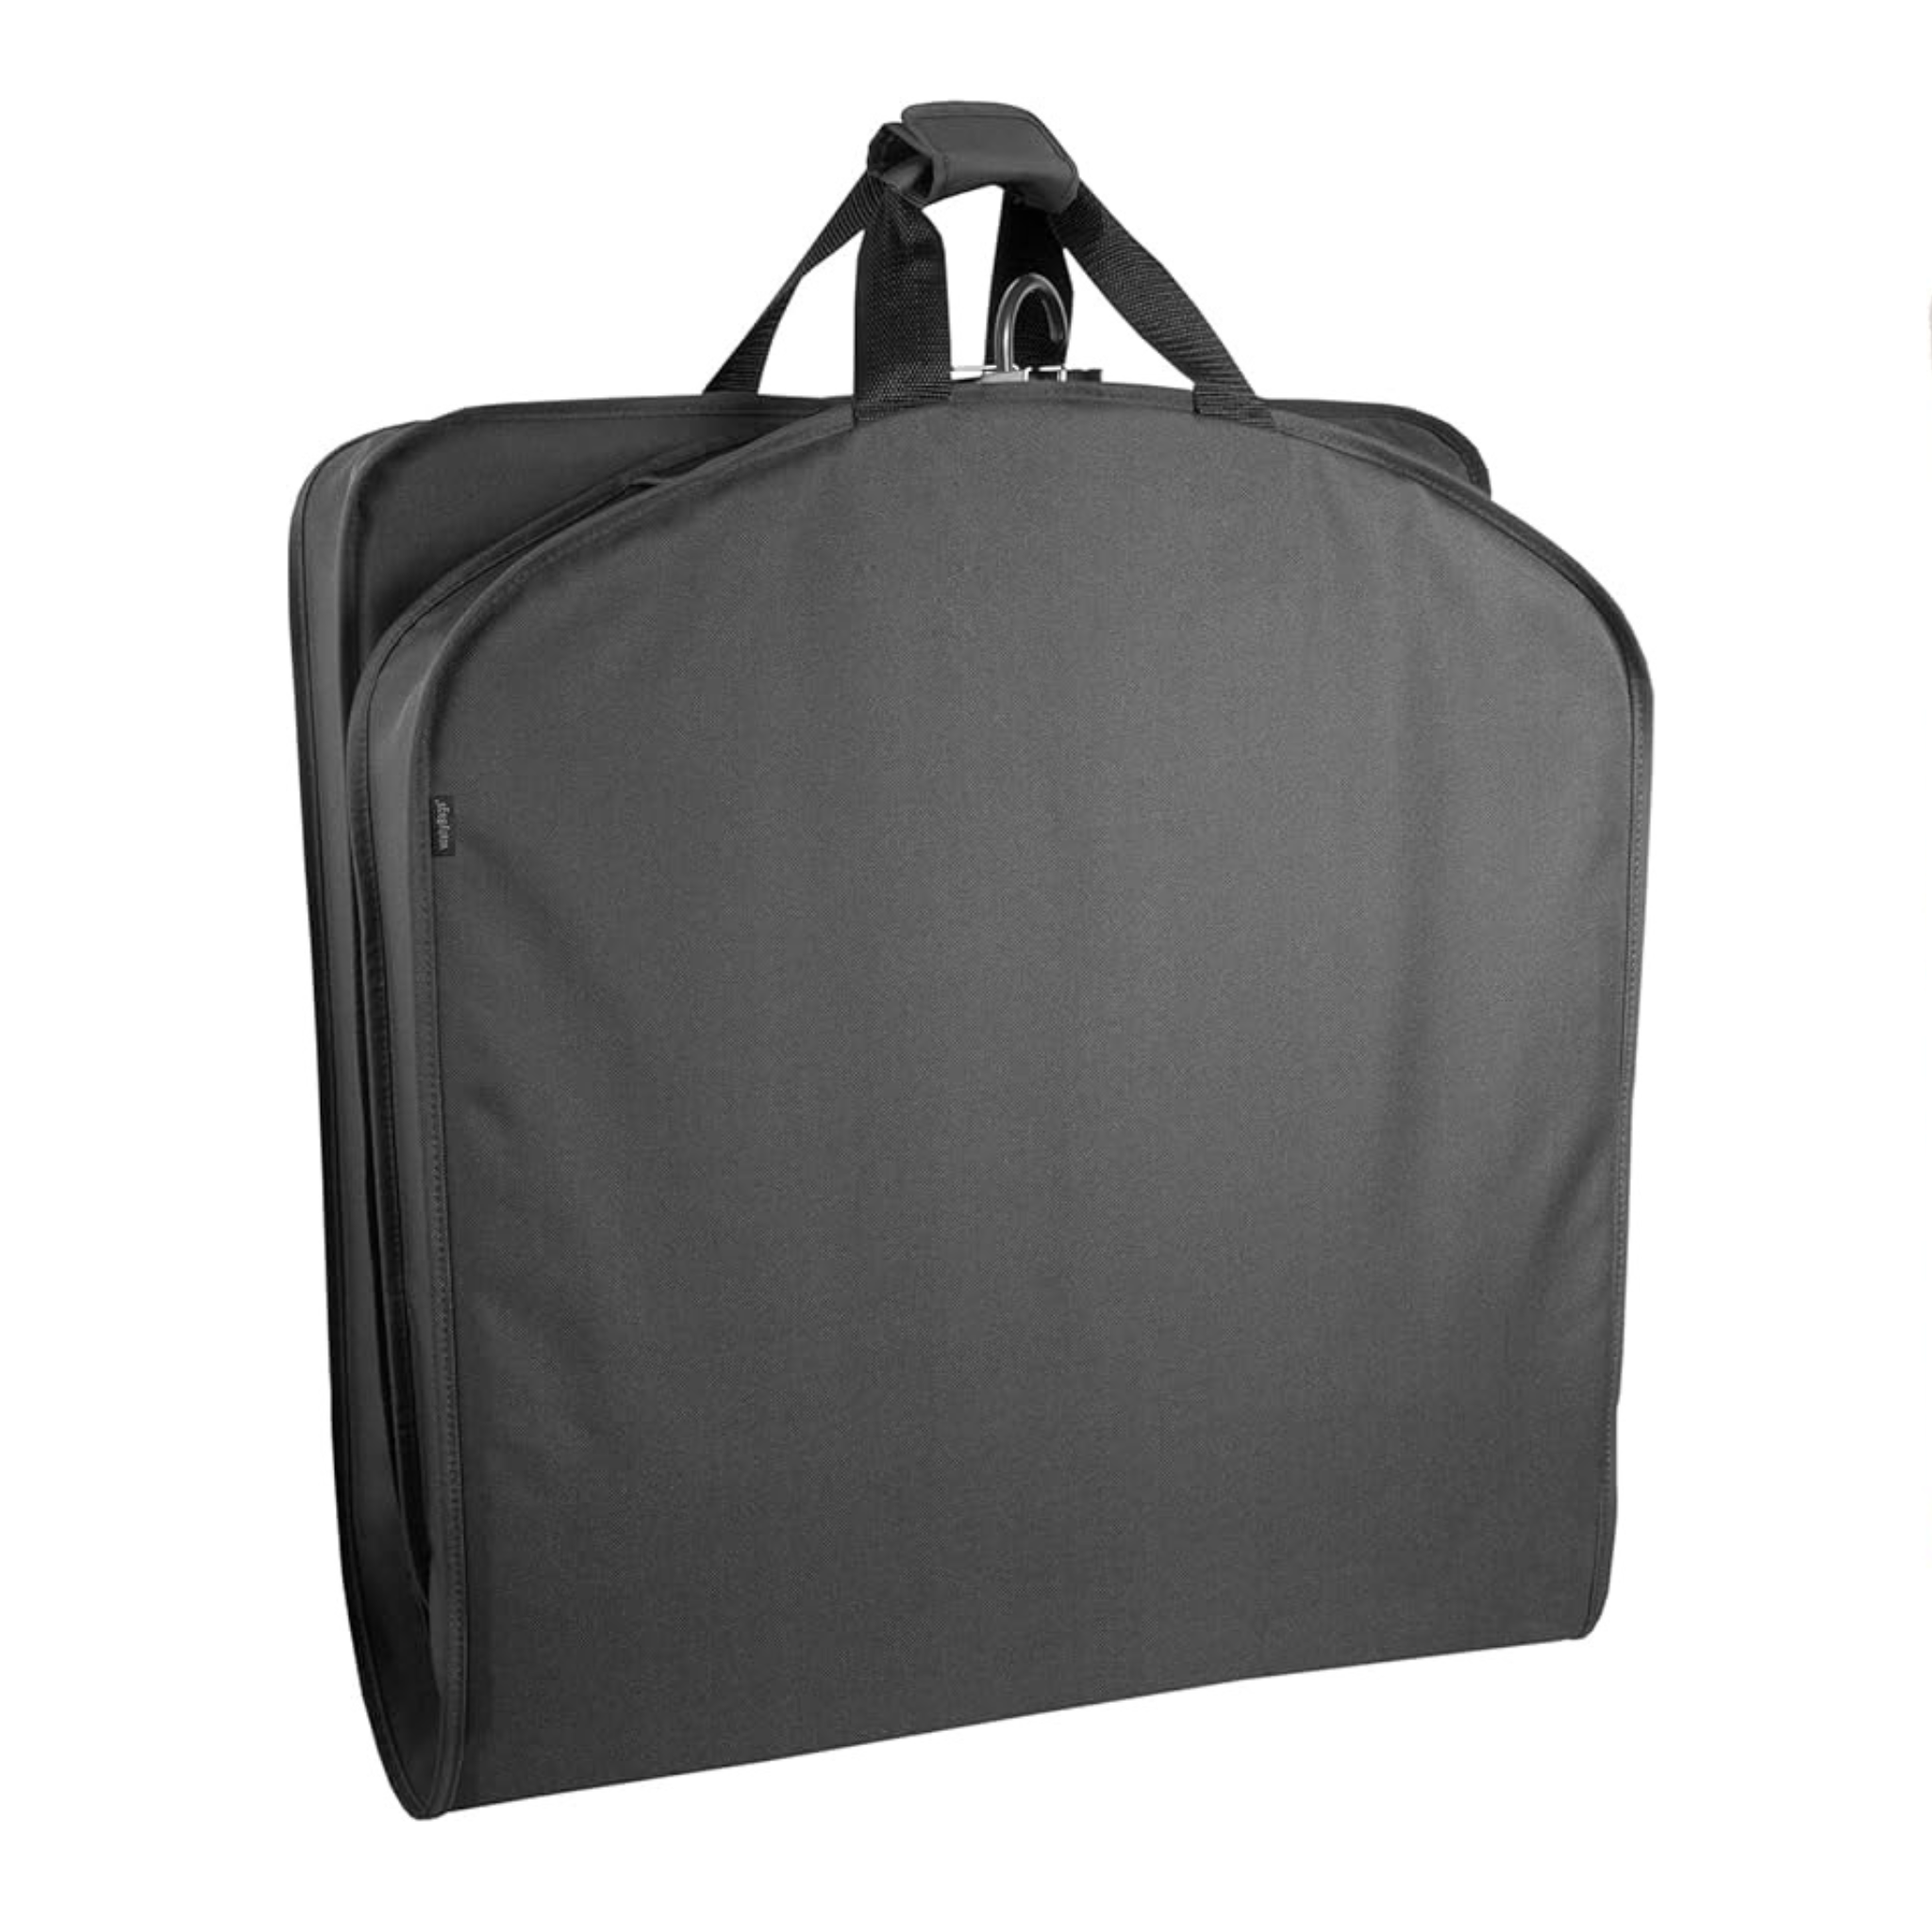 WallyBags 40” Deluxe Travel Garment Bag